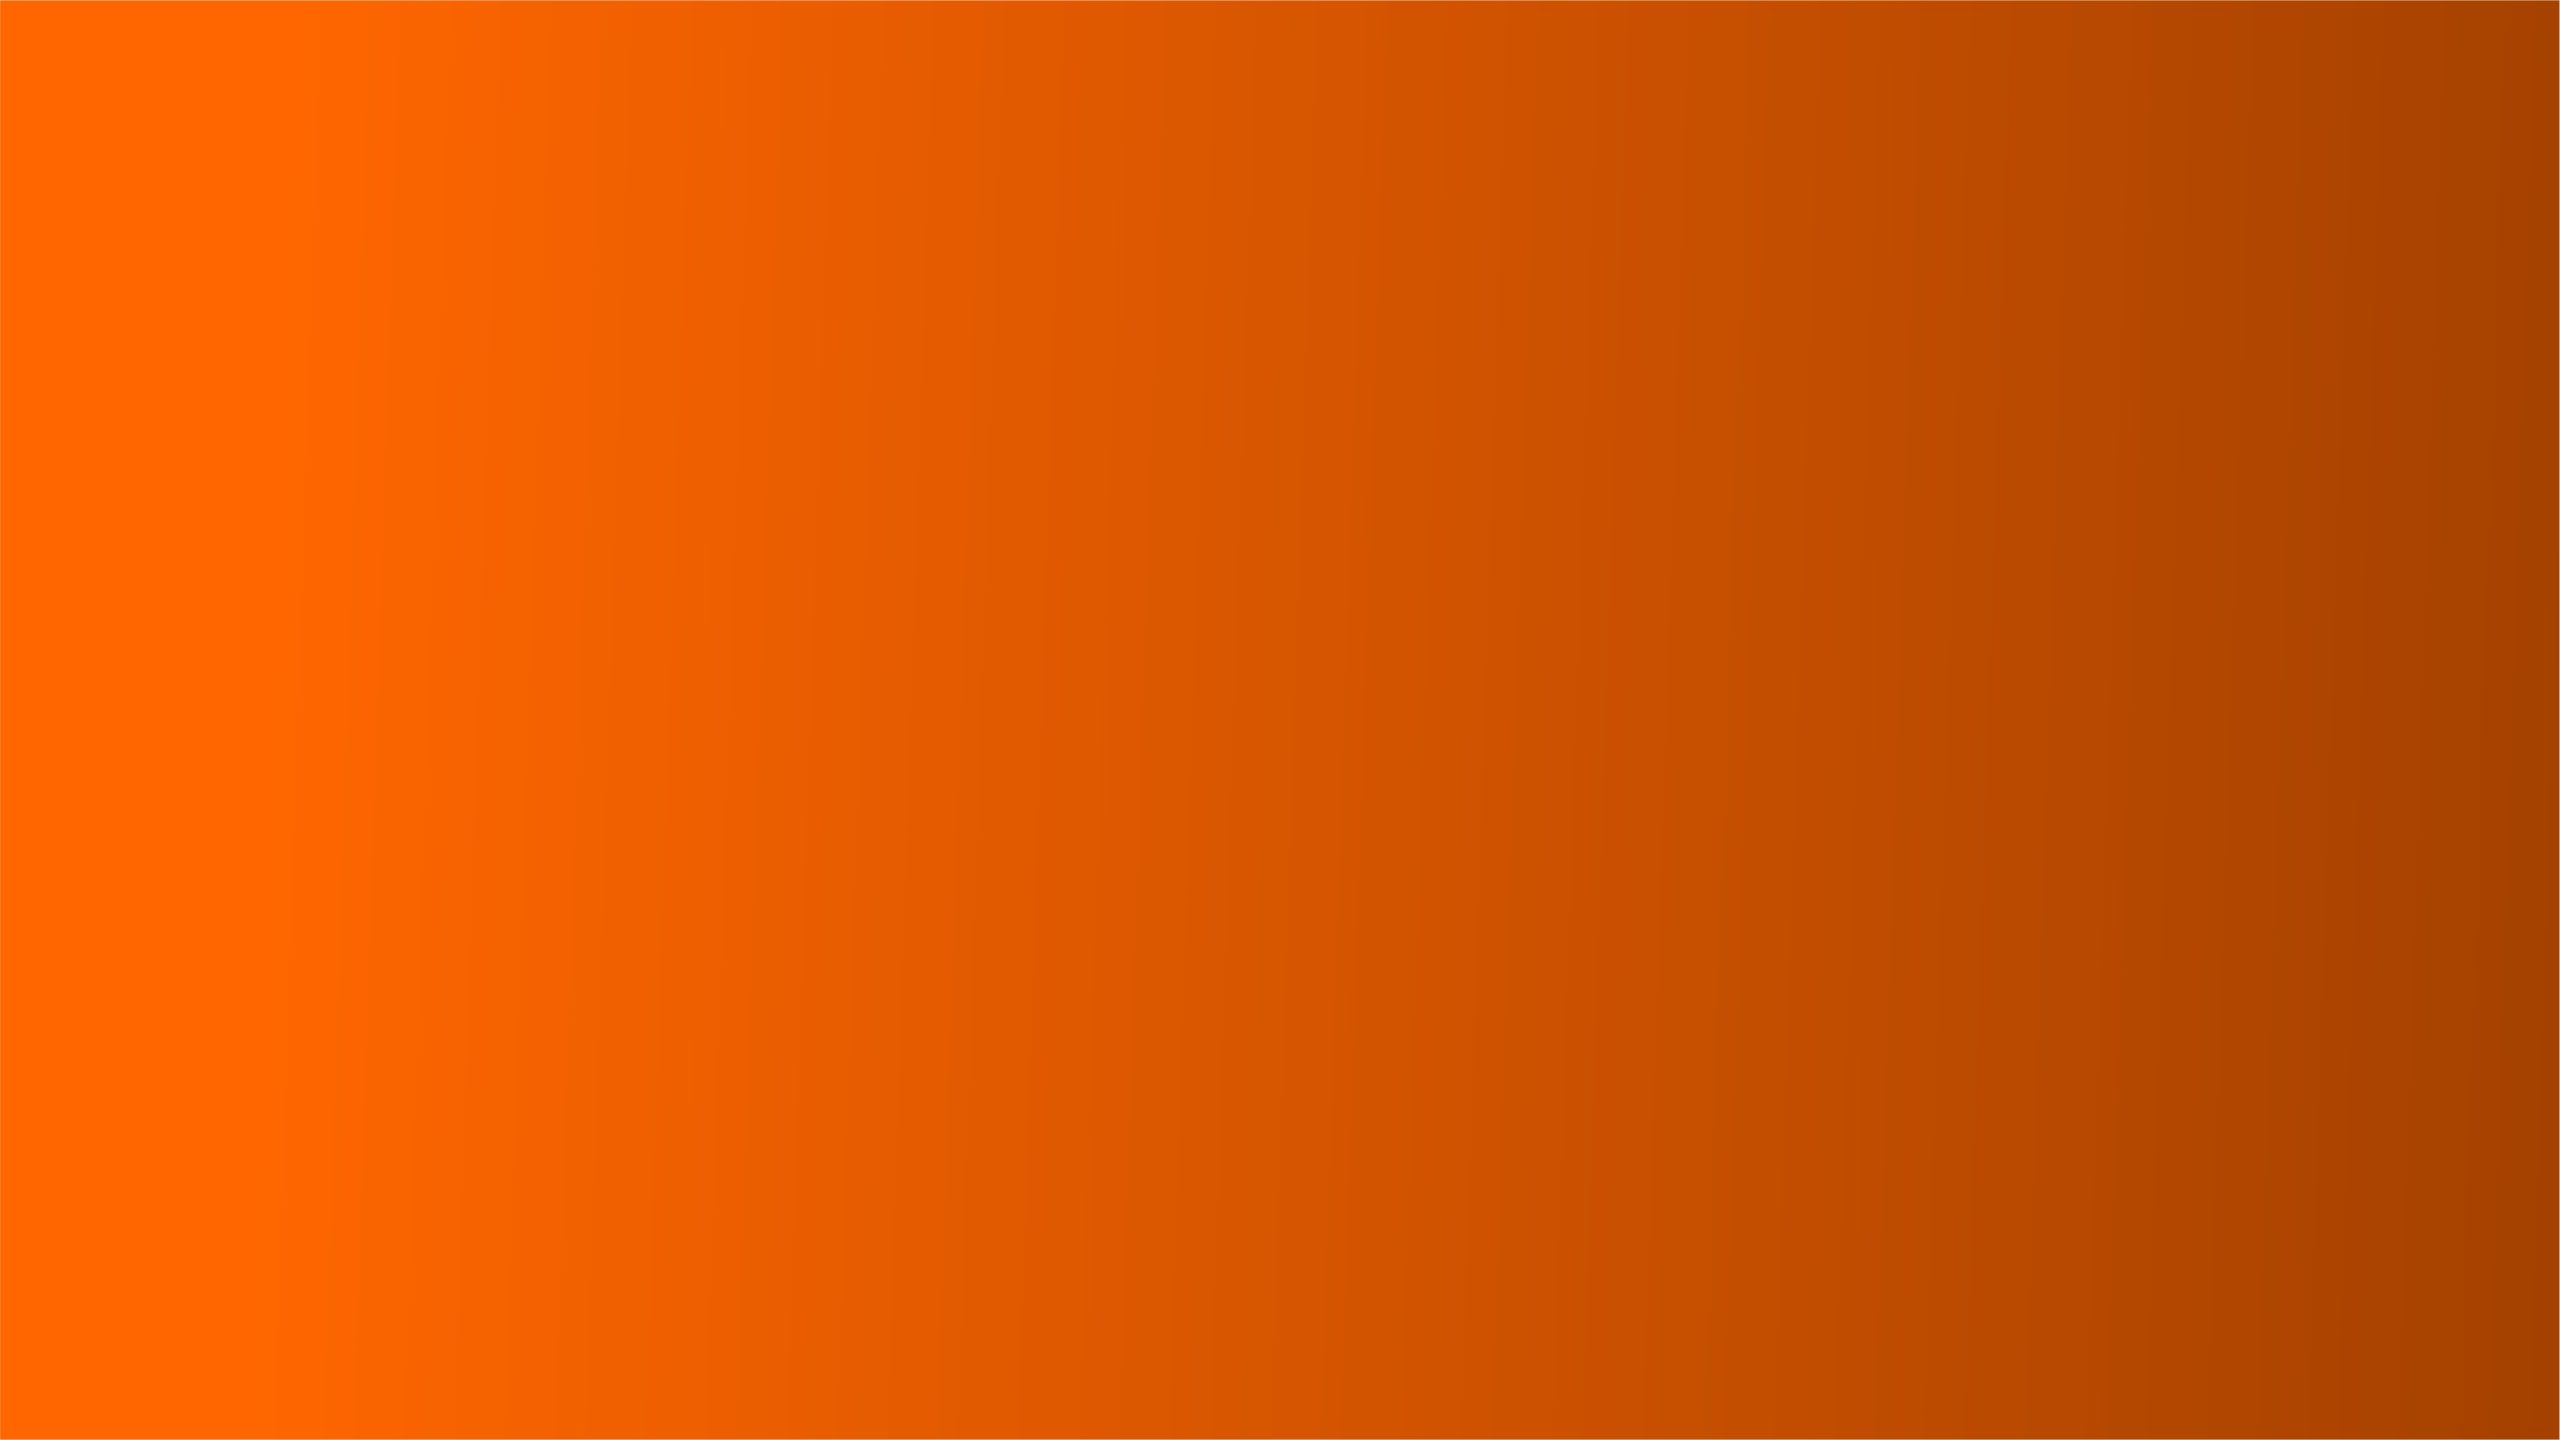 550 Orange Background Pictures  Download Free Images on Unsplash